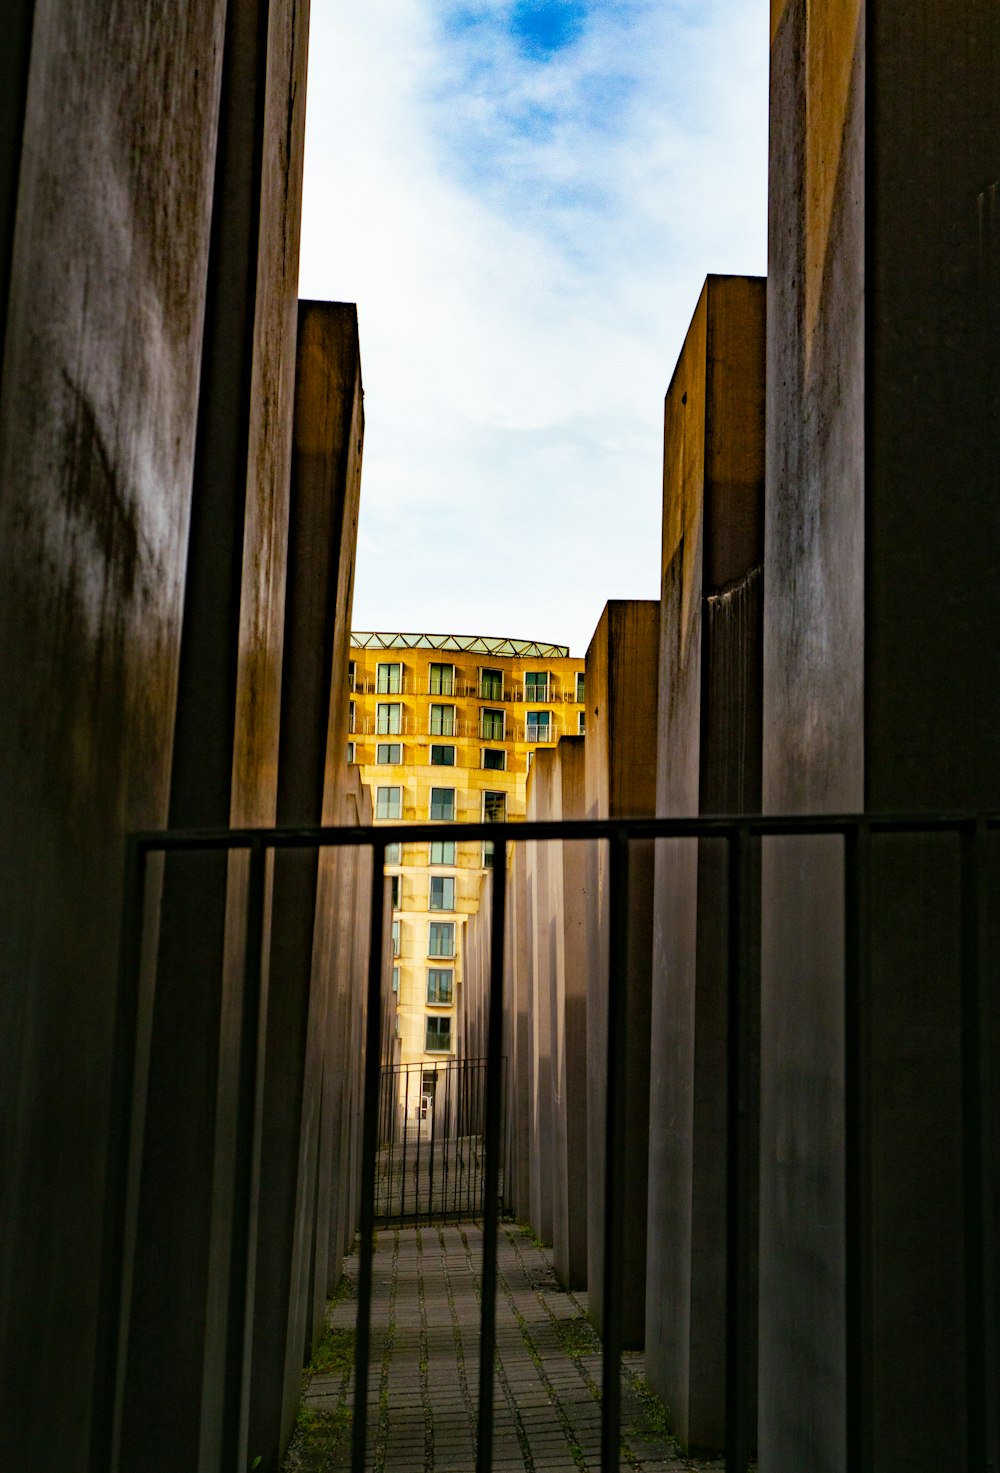 a view of a building through a gate